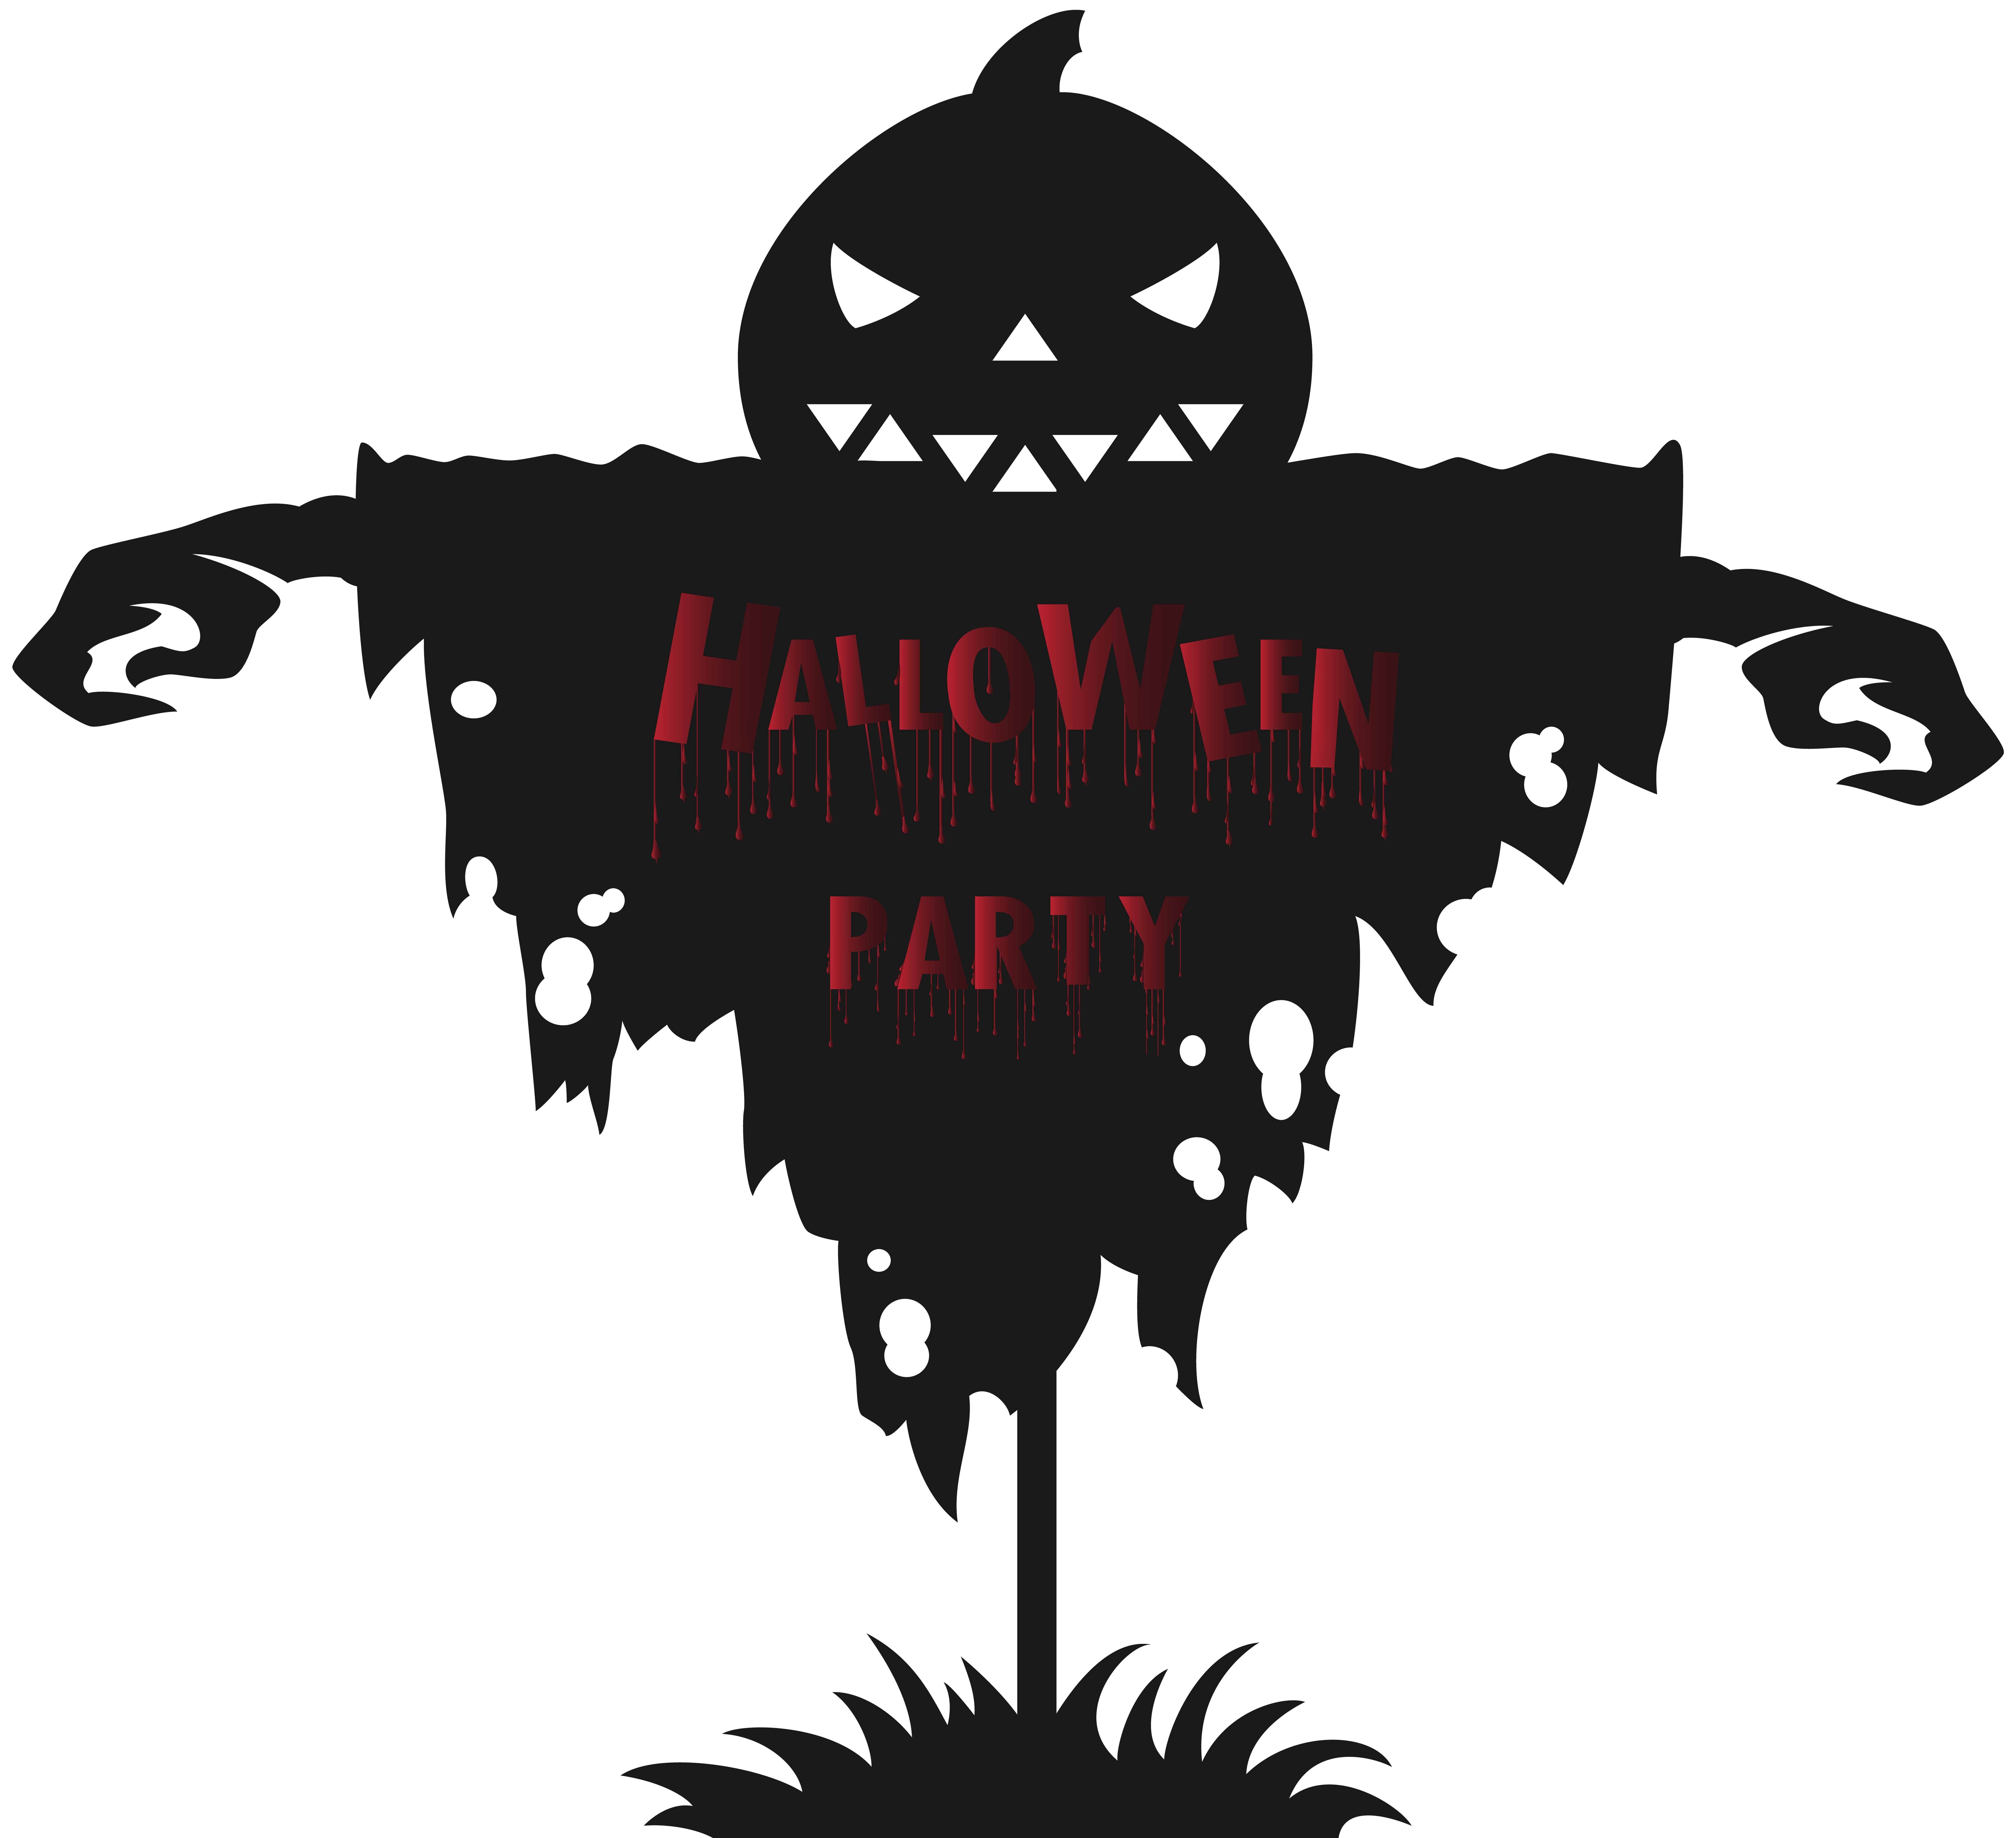 Halloween party scarecrow.